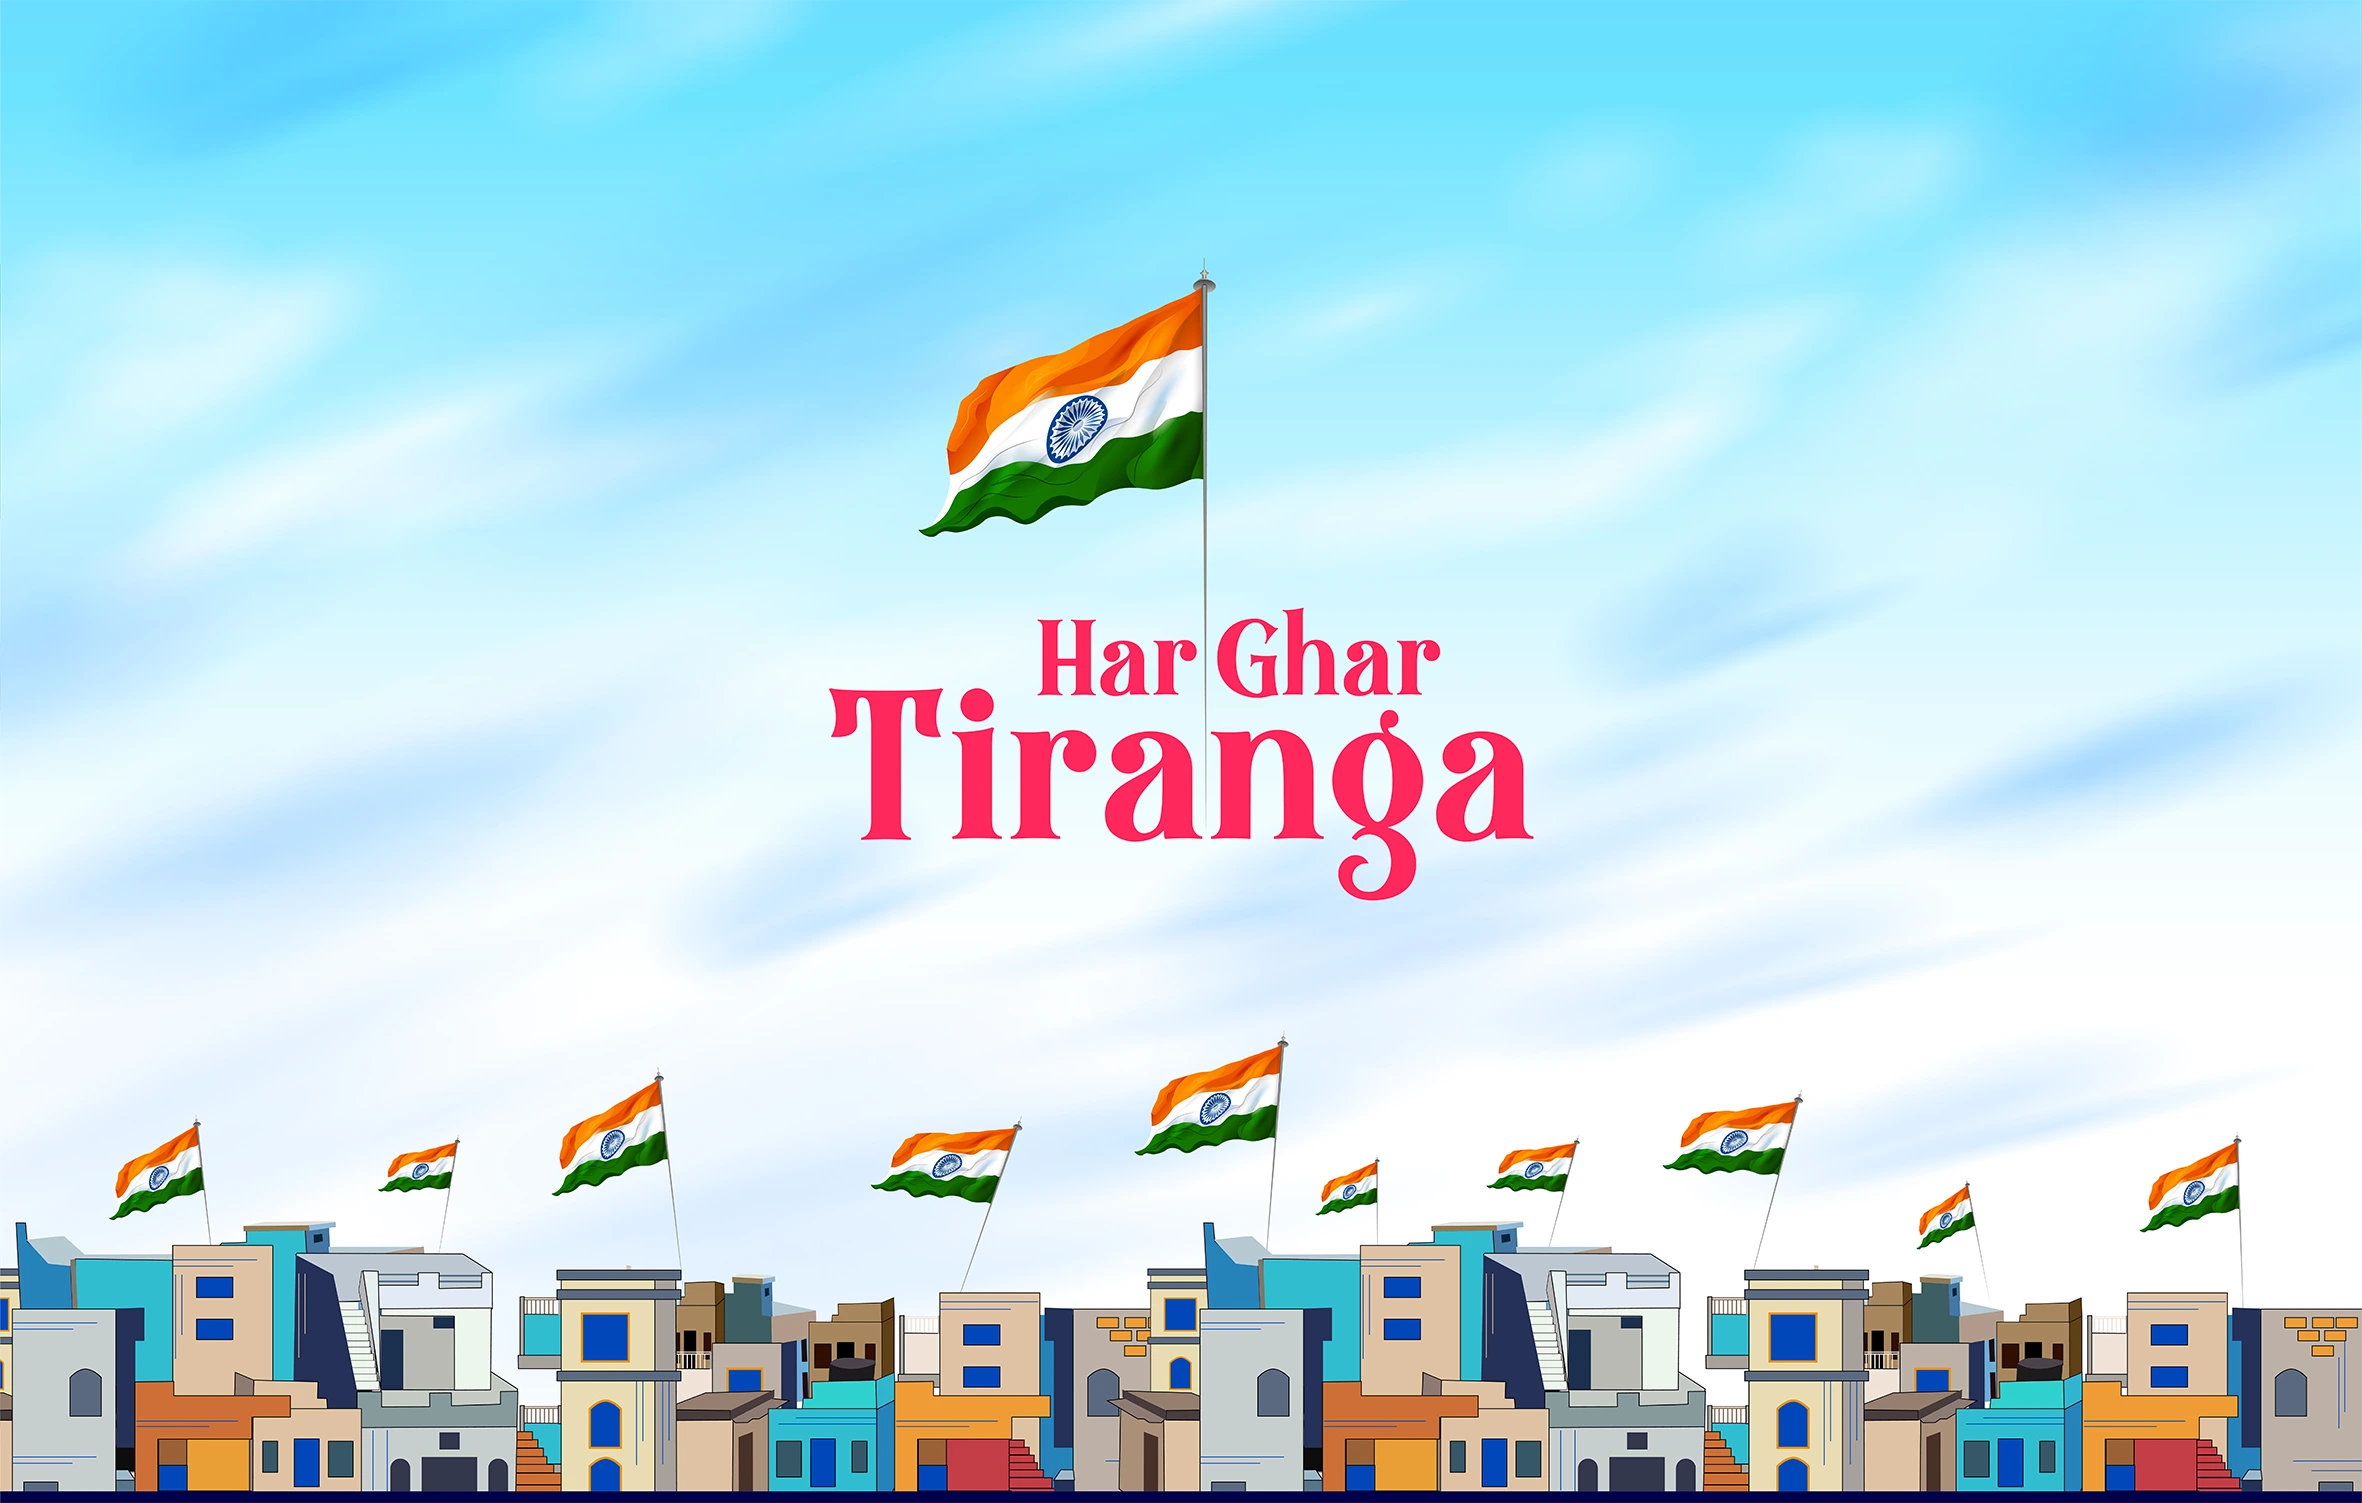 Har-Ghar-Tiranga-in hindi